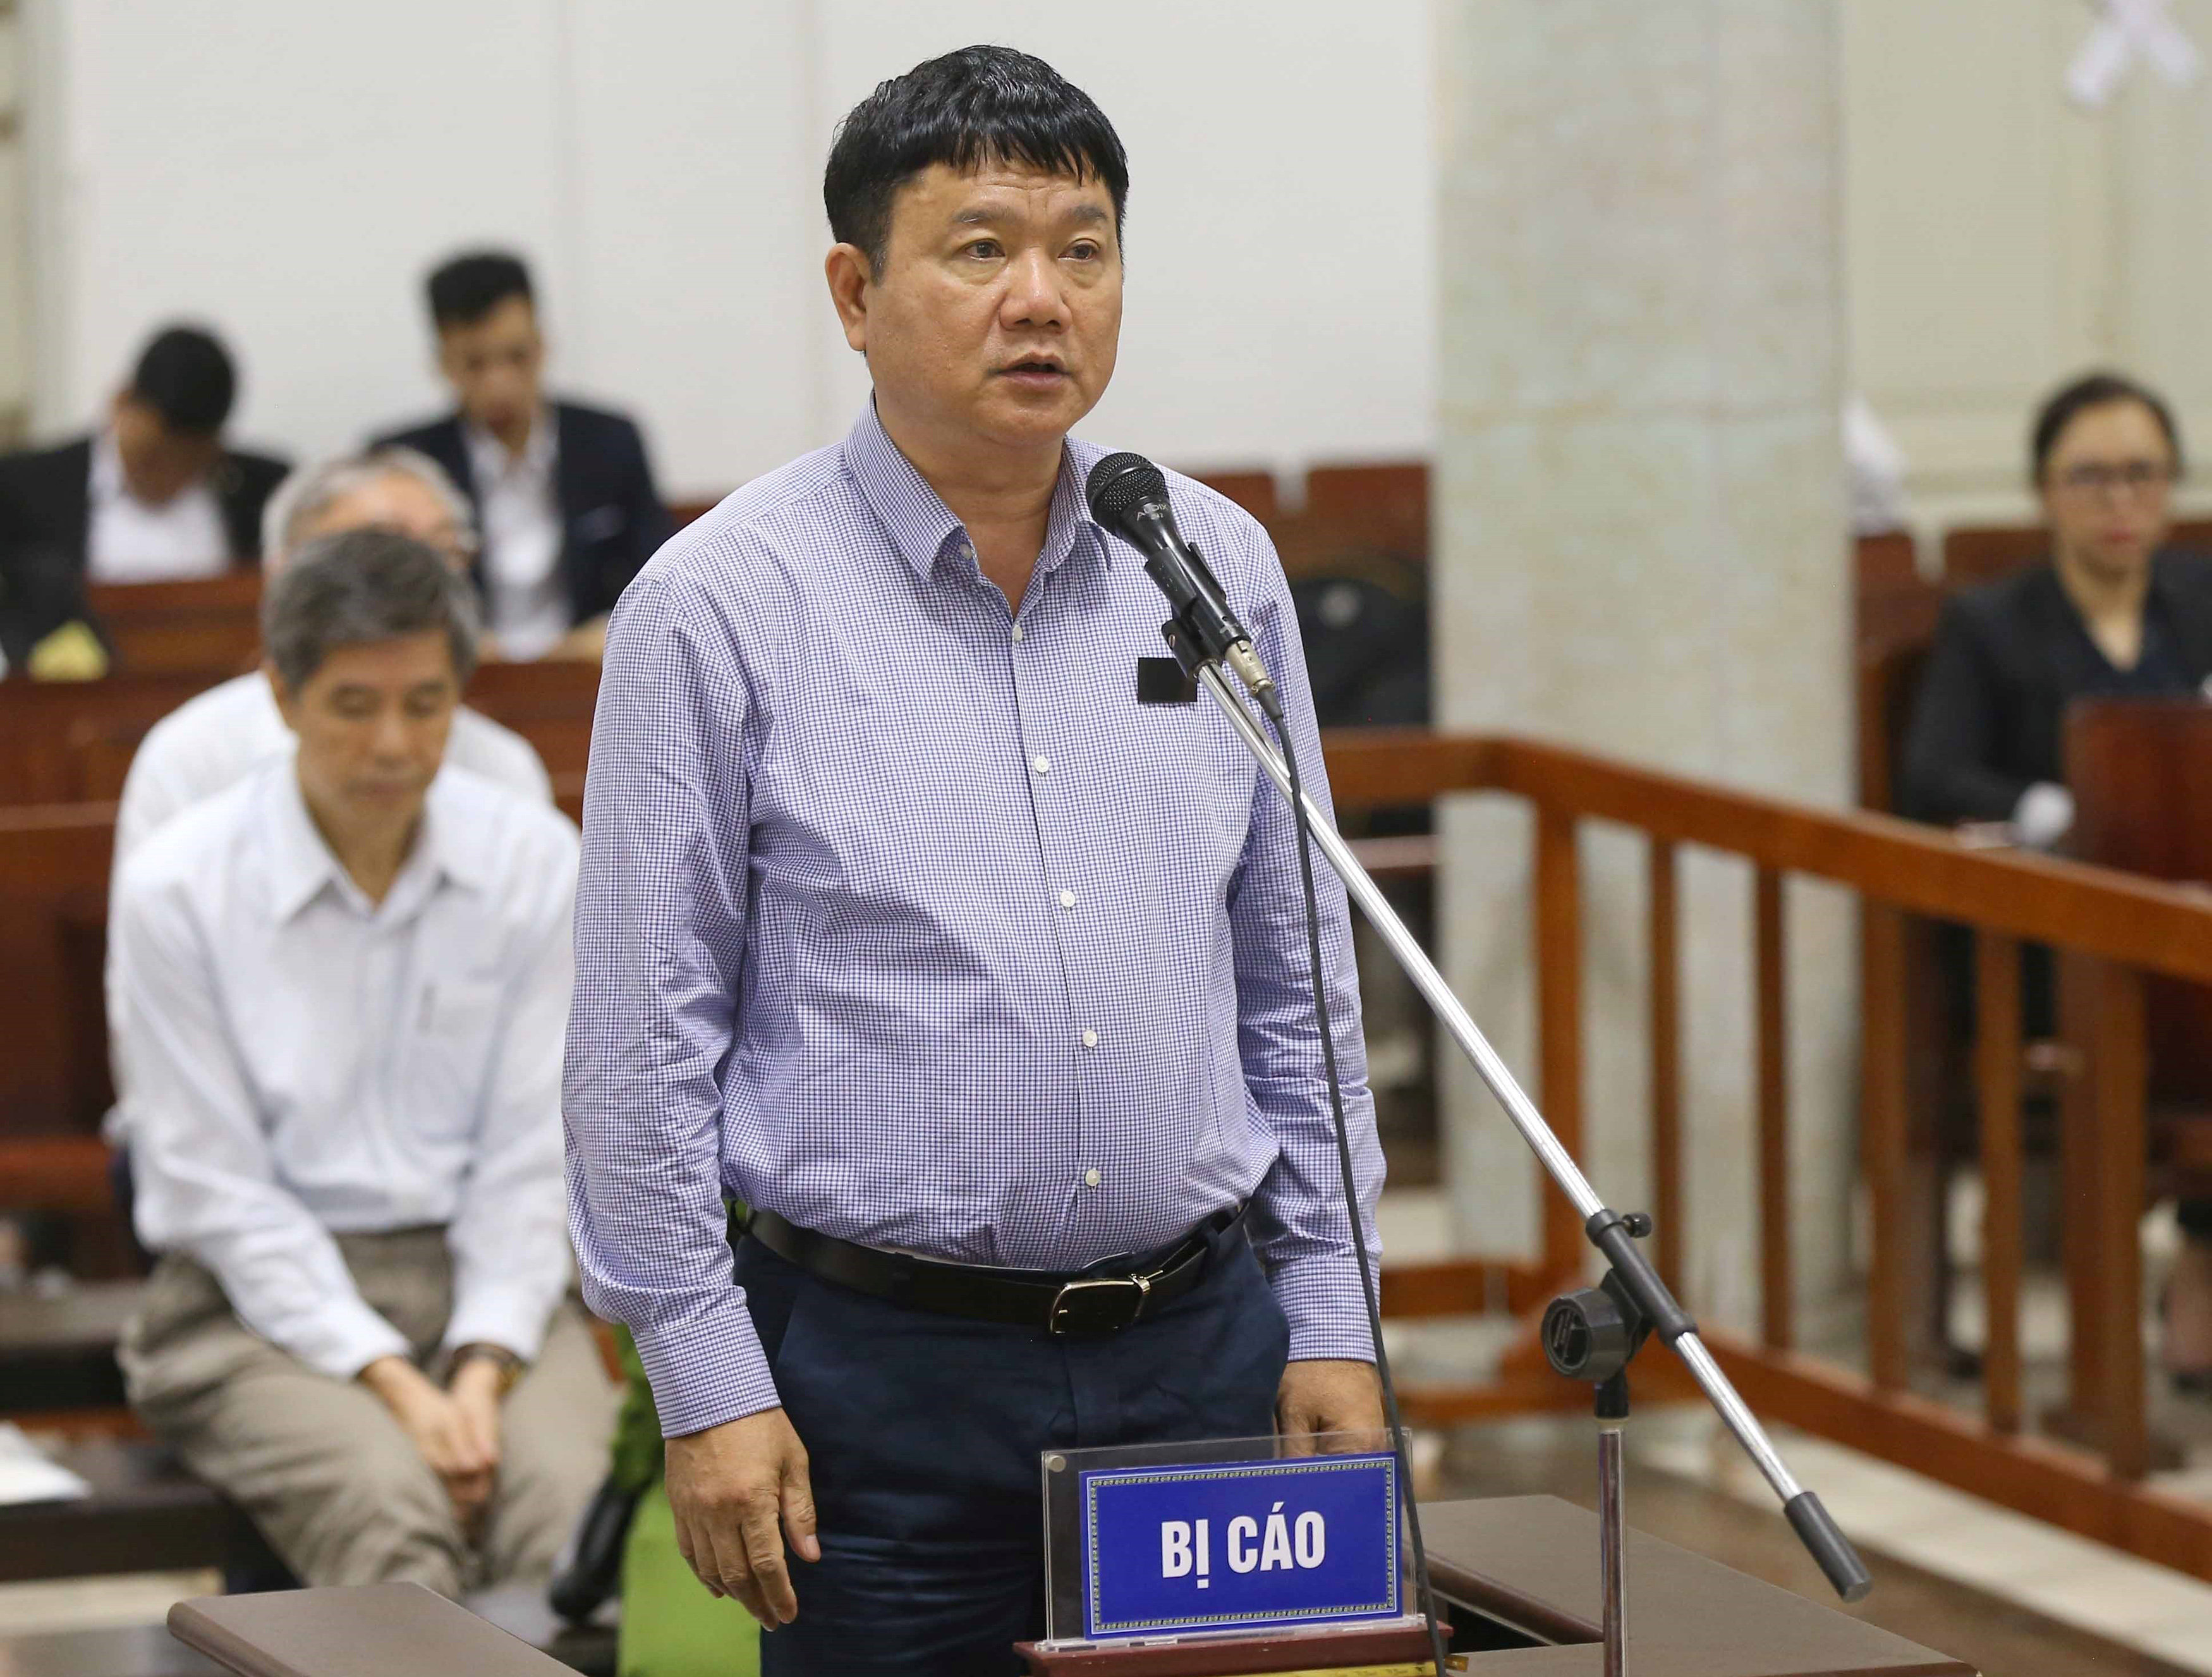 Former Vietnam politburo member back in court on suspicion of corruption